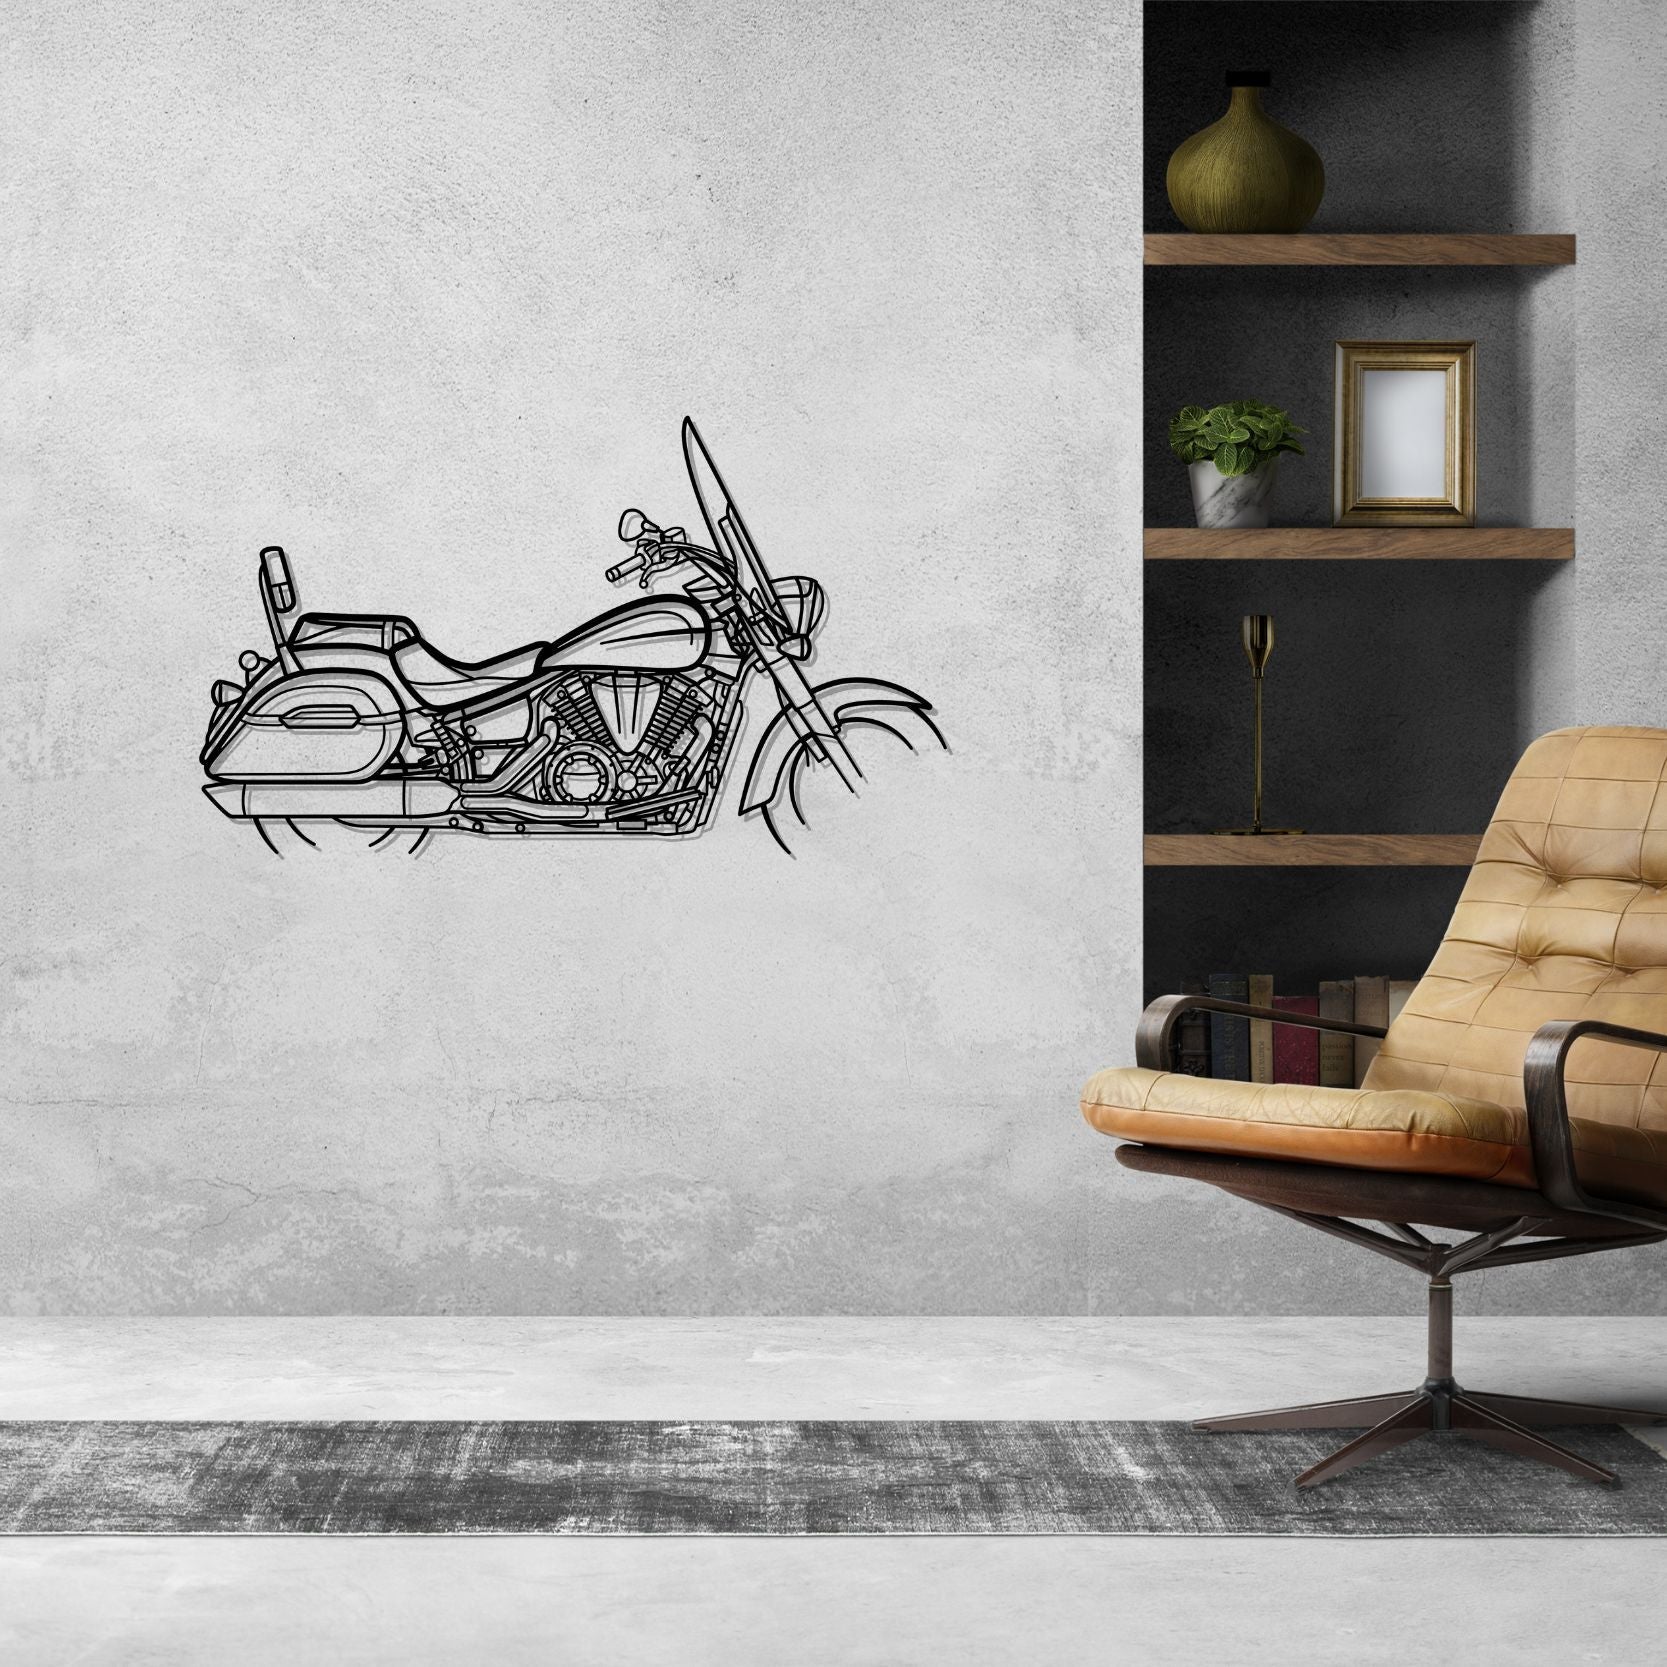 Motorcycle Wall Art Metal - Metal Signs Motorcycle - Metal Signs For Garage - Garage Decorations